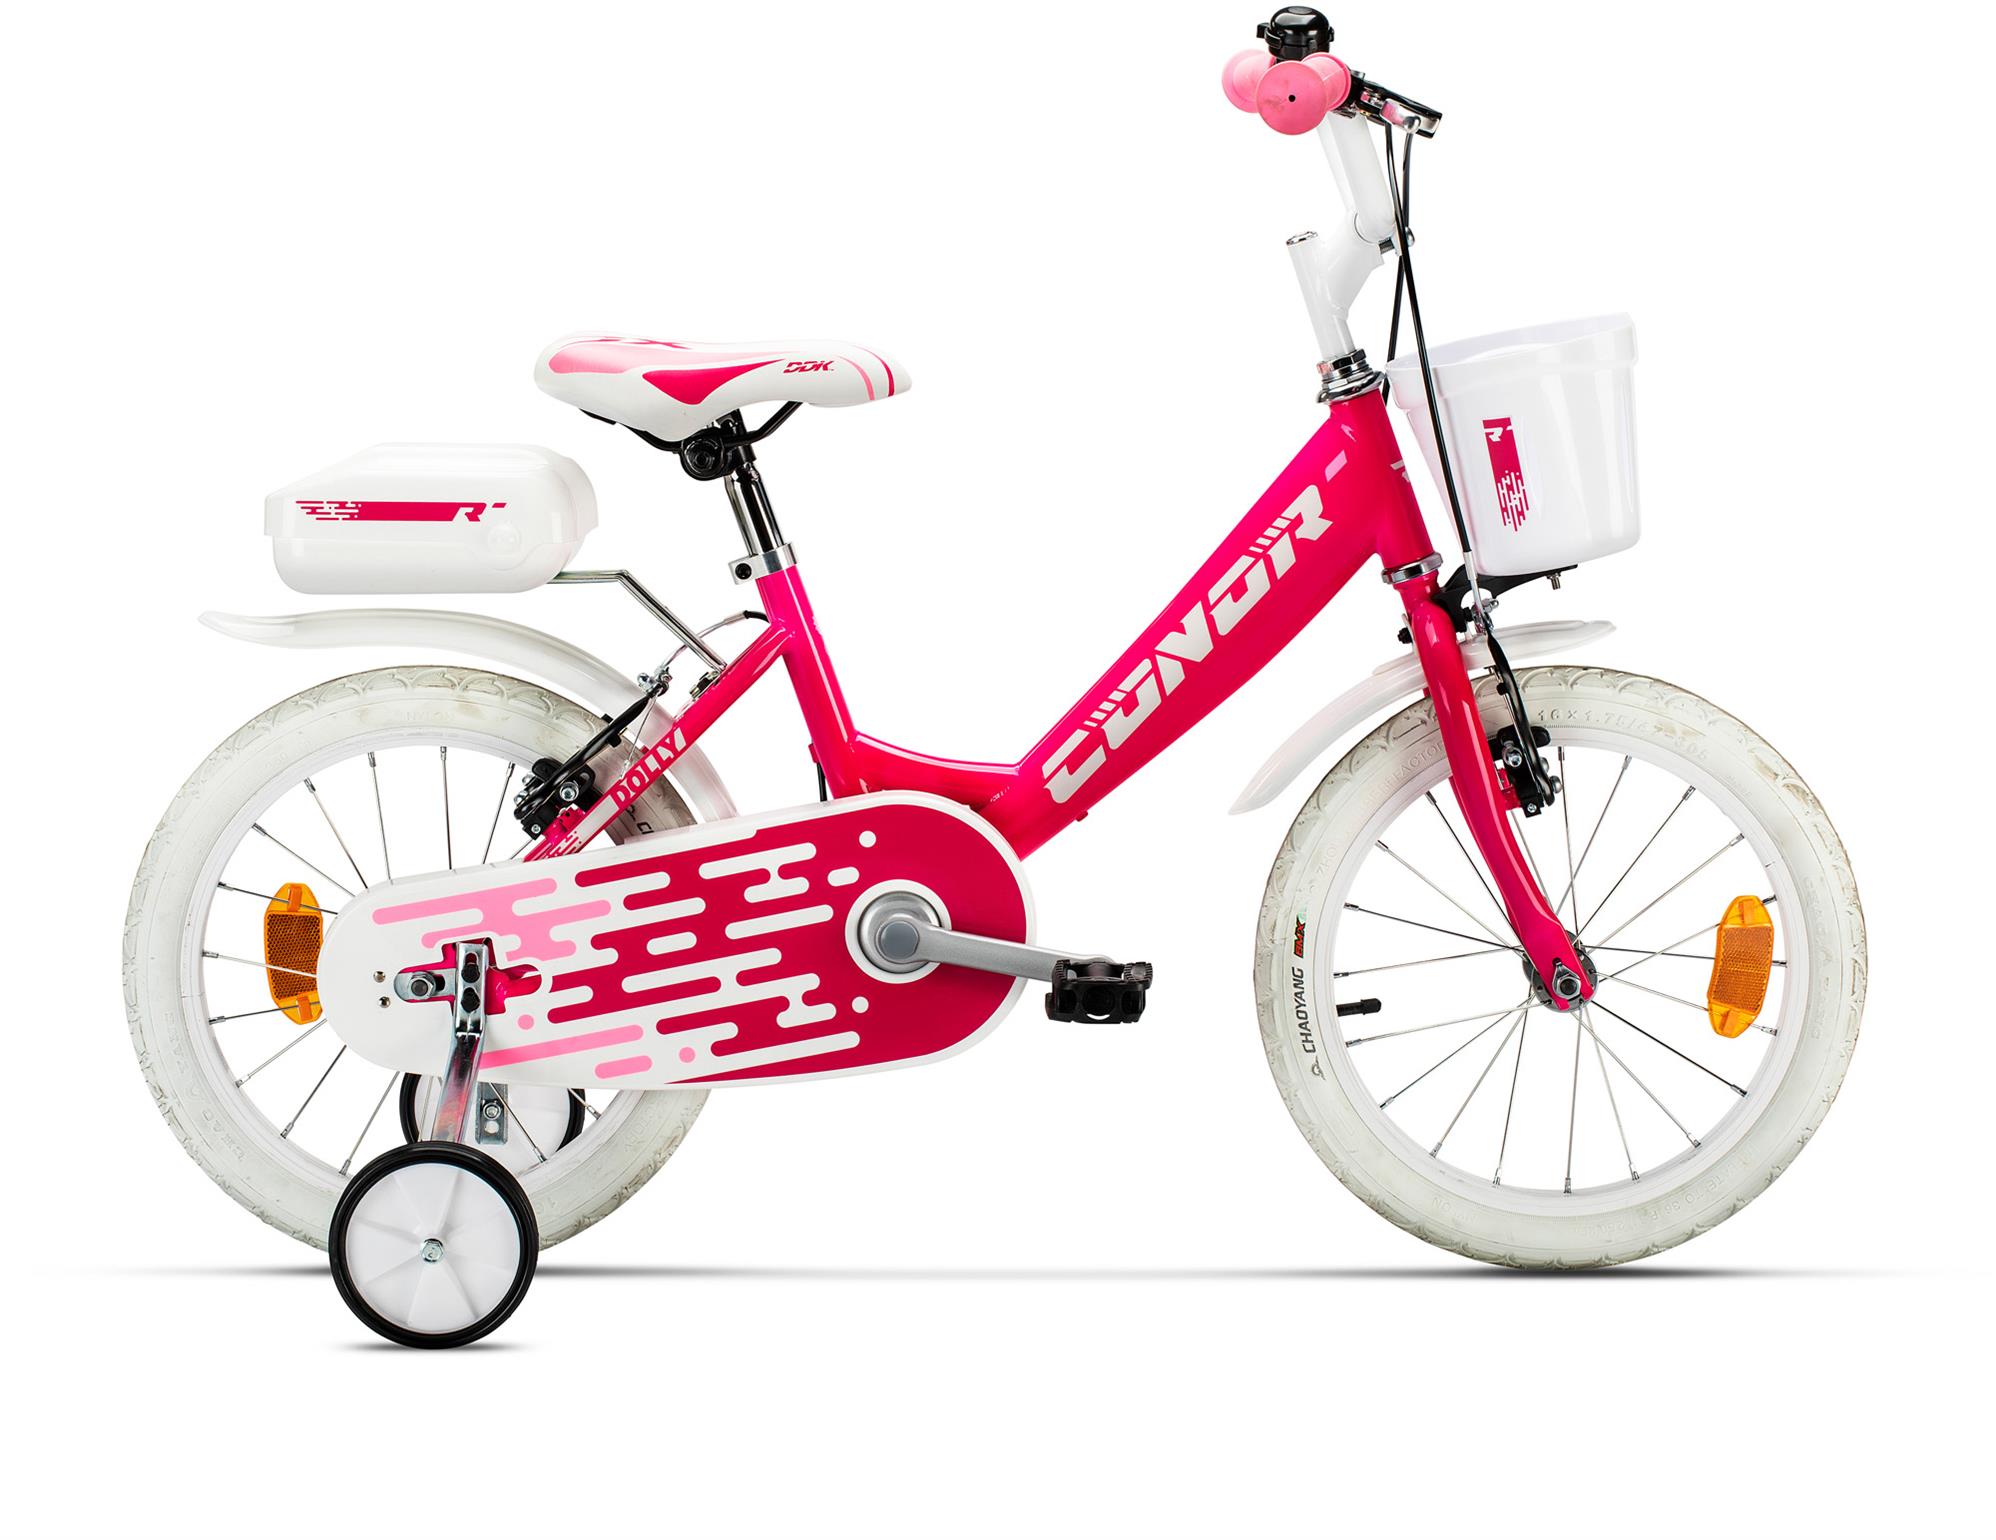 Bicicleta infantil 16 Conor Dolly entrega 24-48 horas ⋆ Ciclo-mania